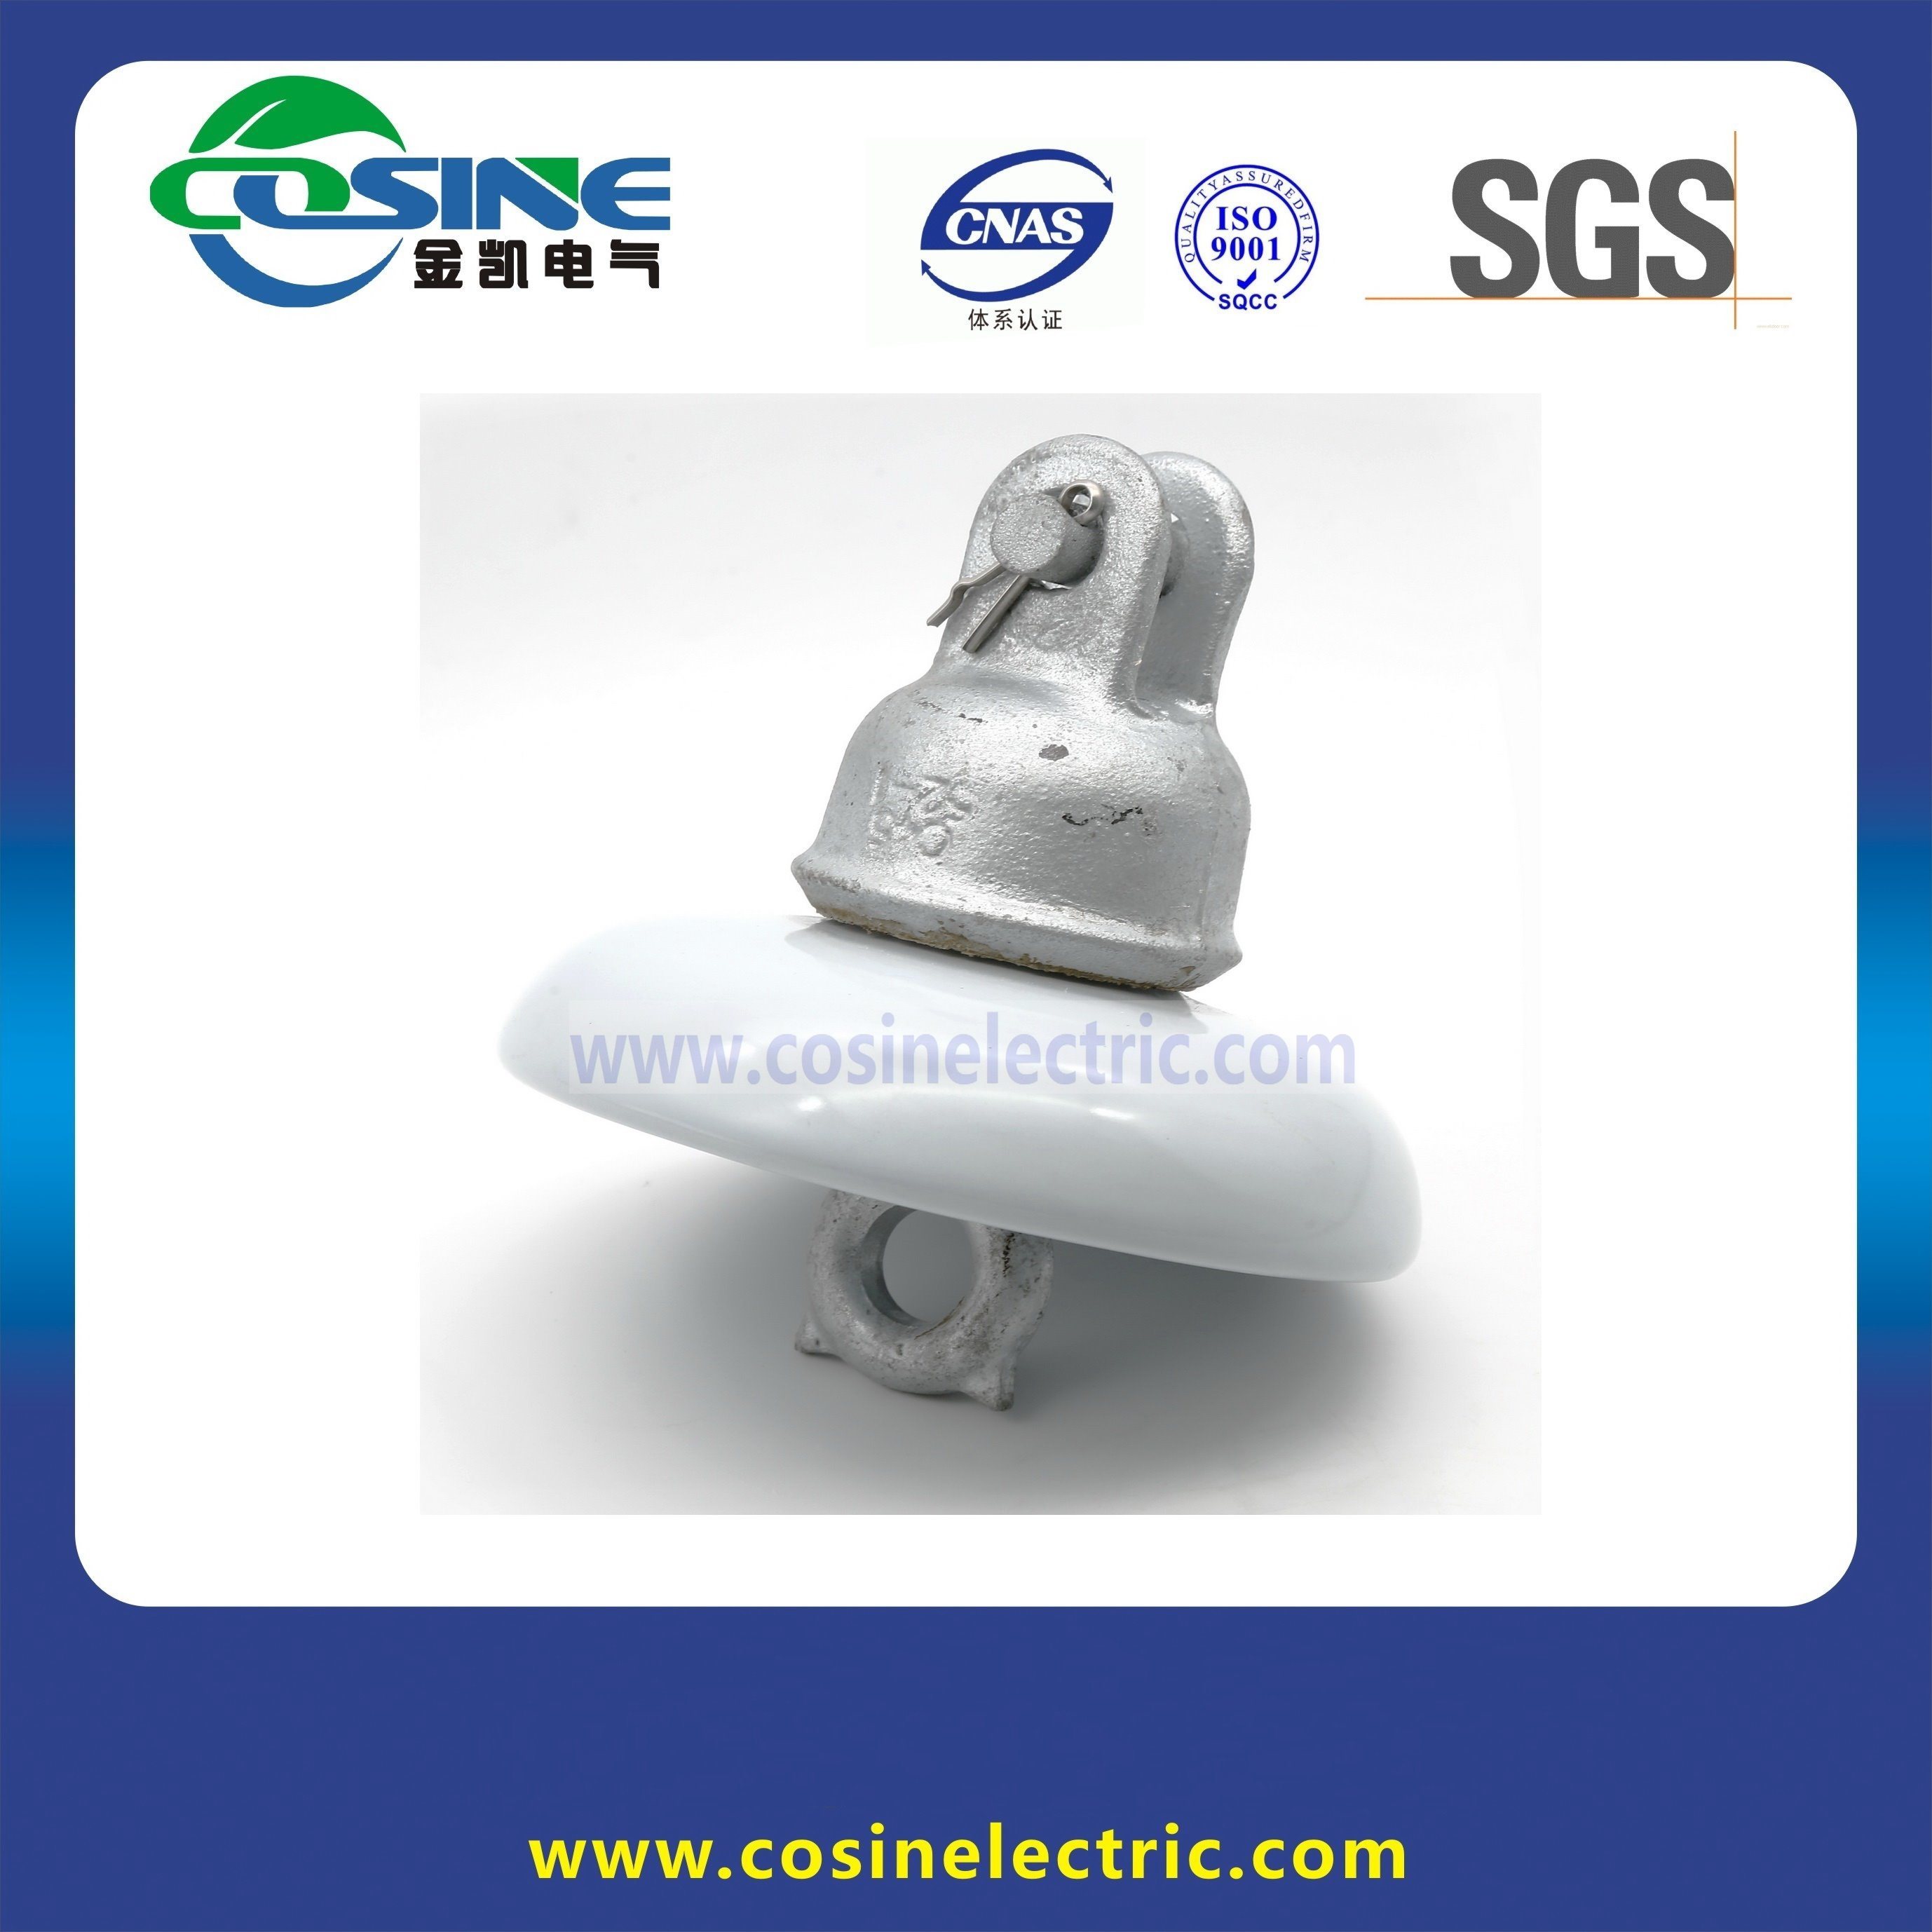 52-6 Ceramic/Porcelain Disc Suspension Insulator for Power Line Transmission